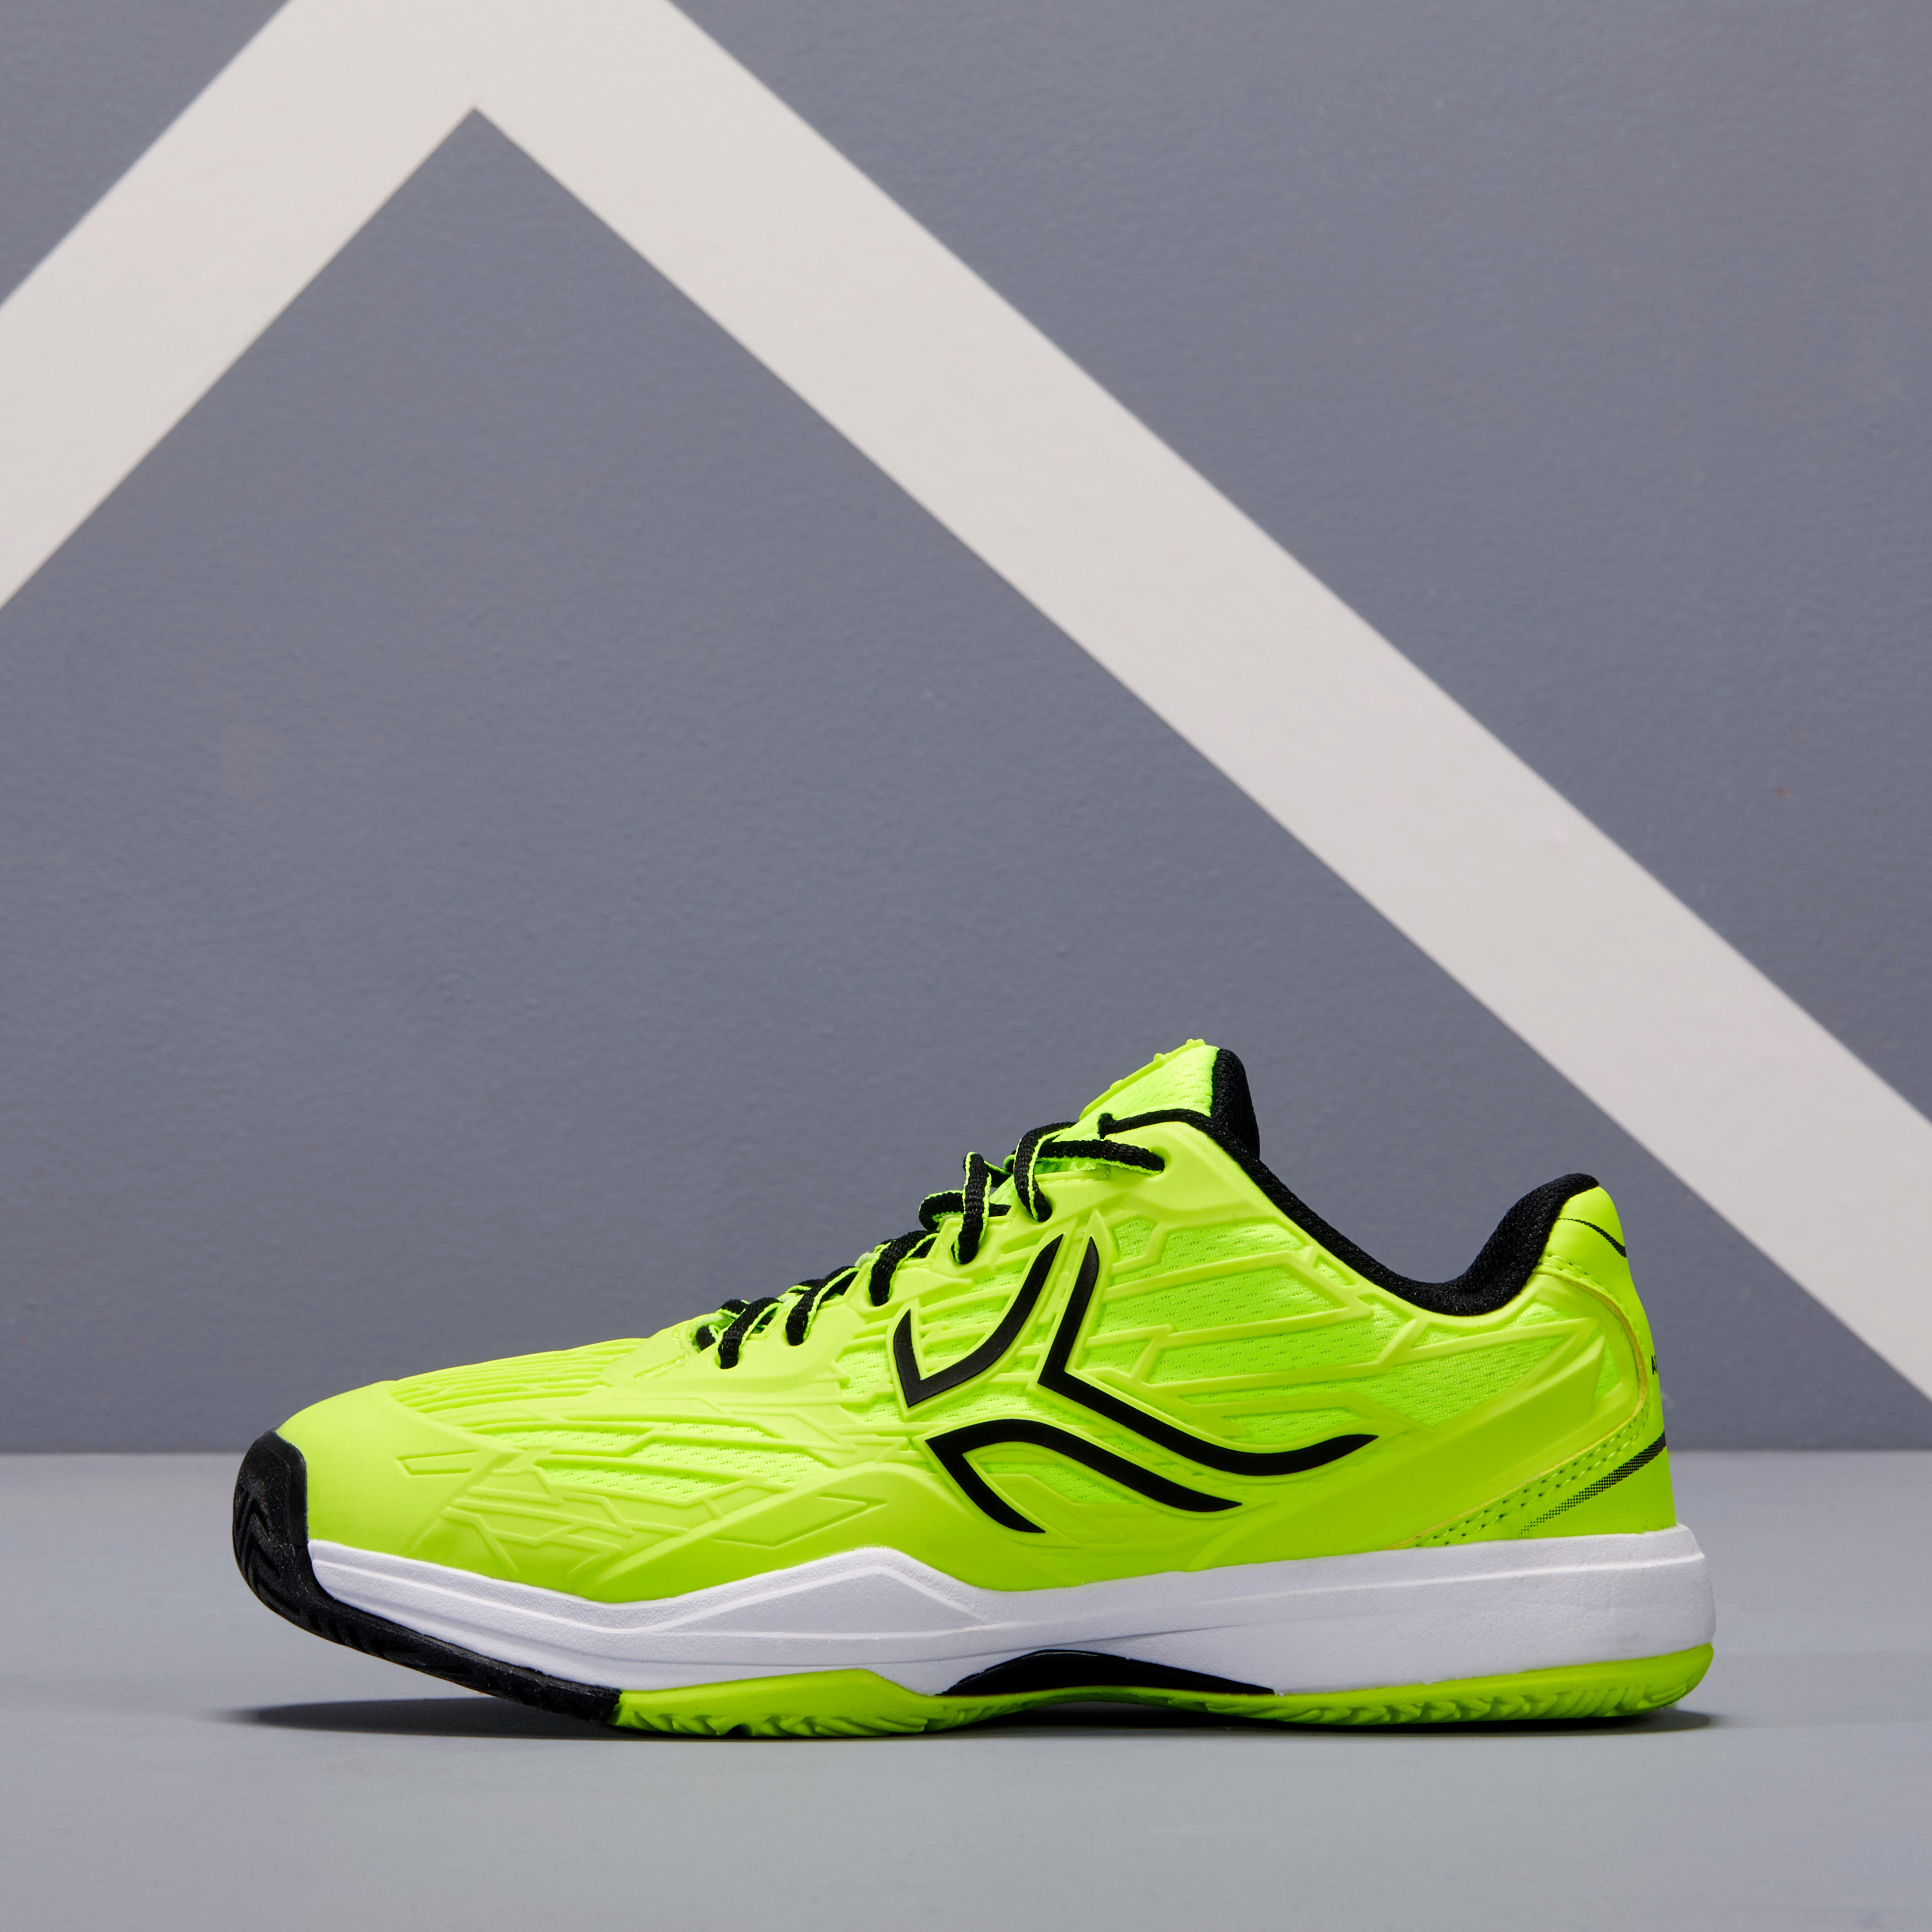 neon yellow tennis shoes